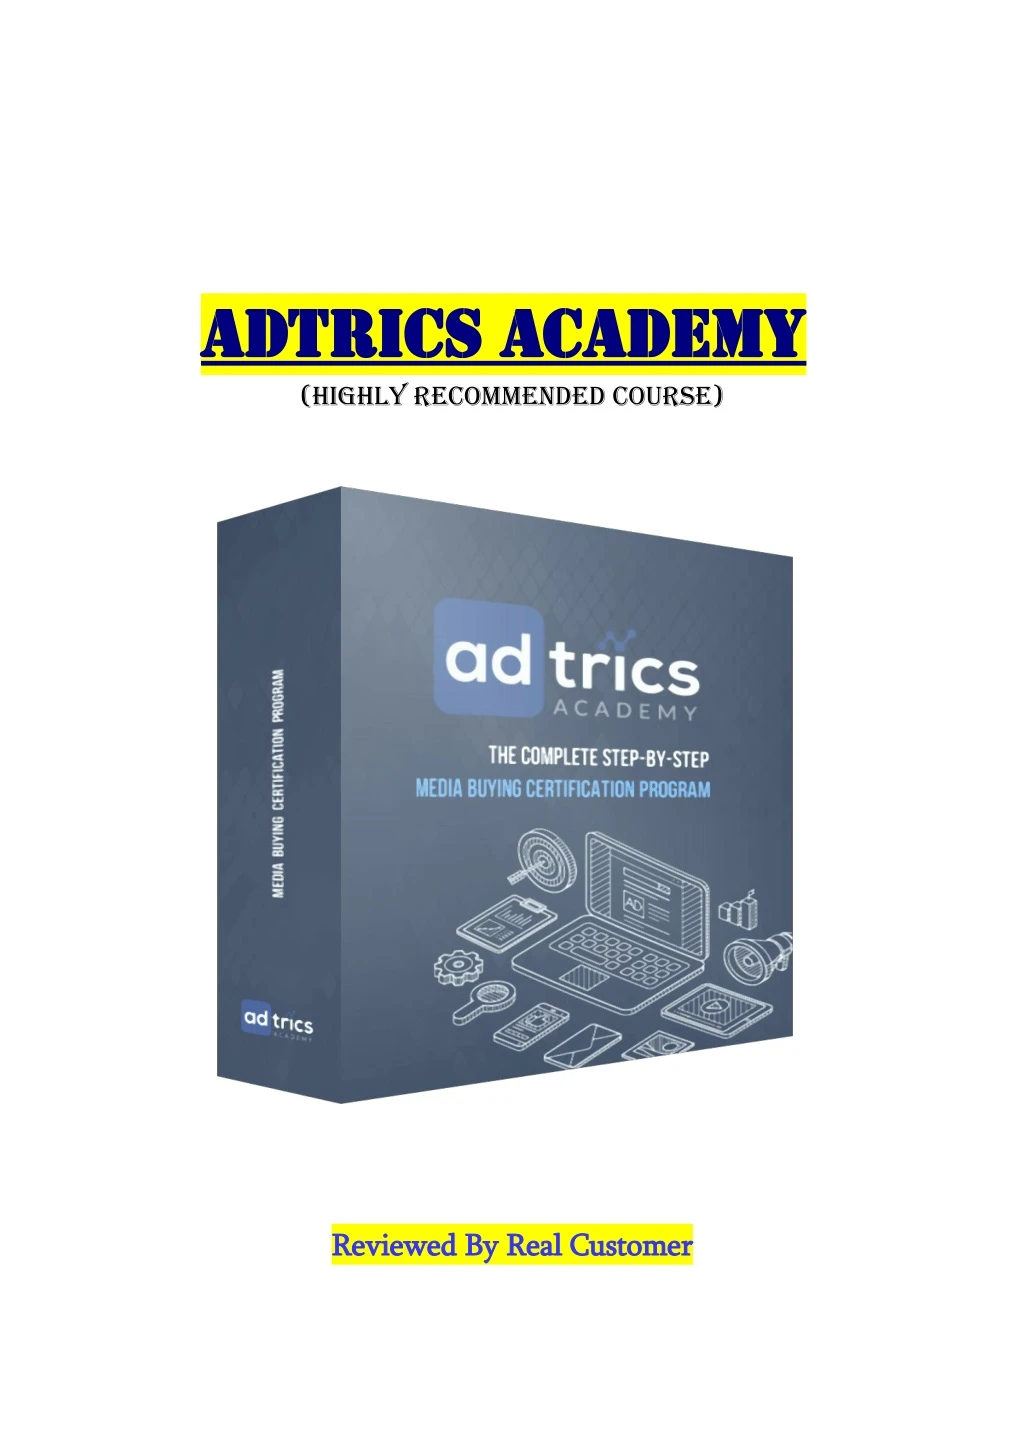 adtrics academy adtrics academy highly